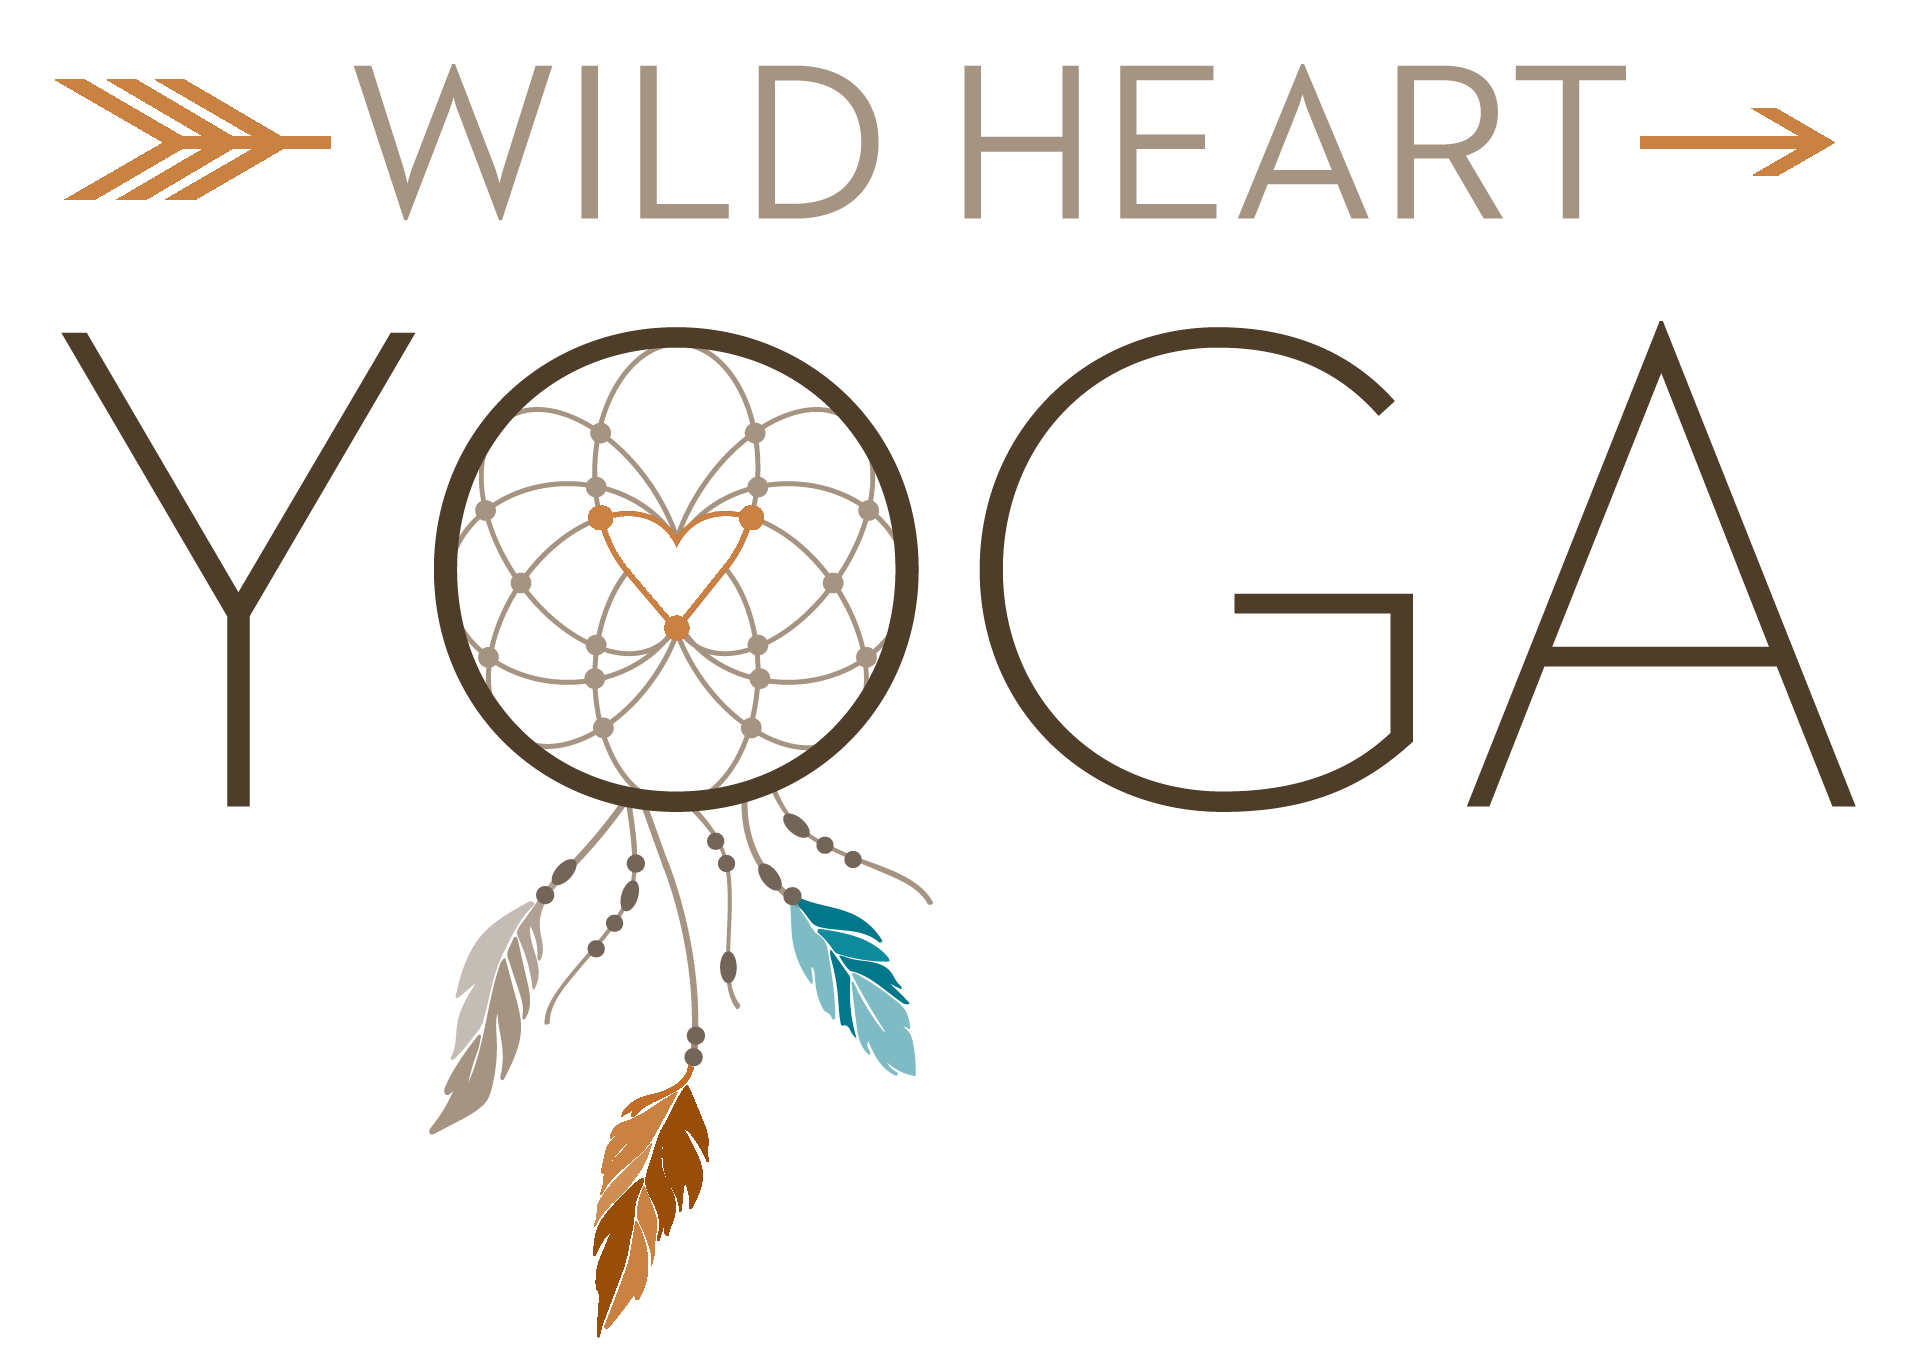 Wild Heart Yoga